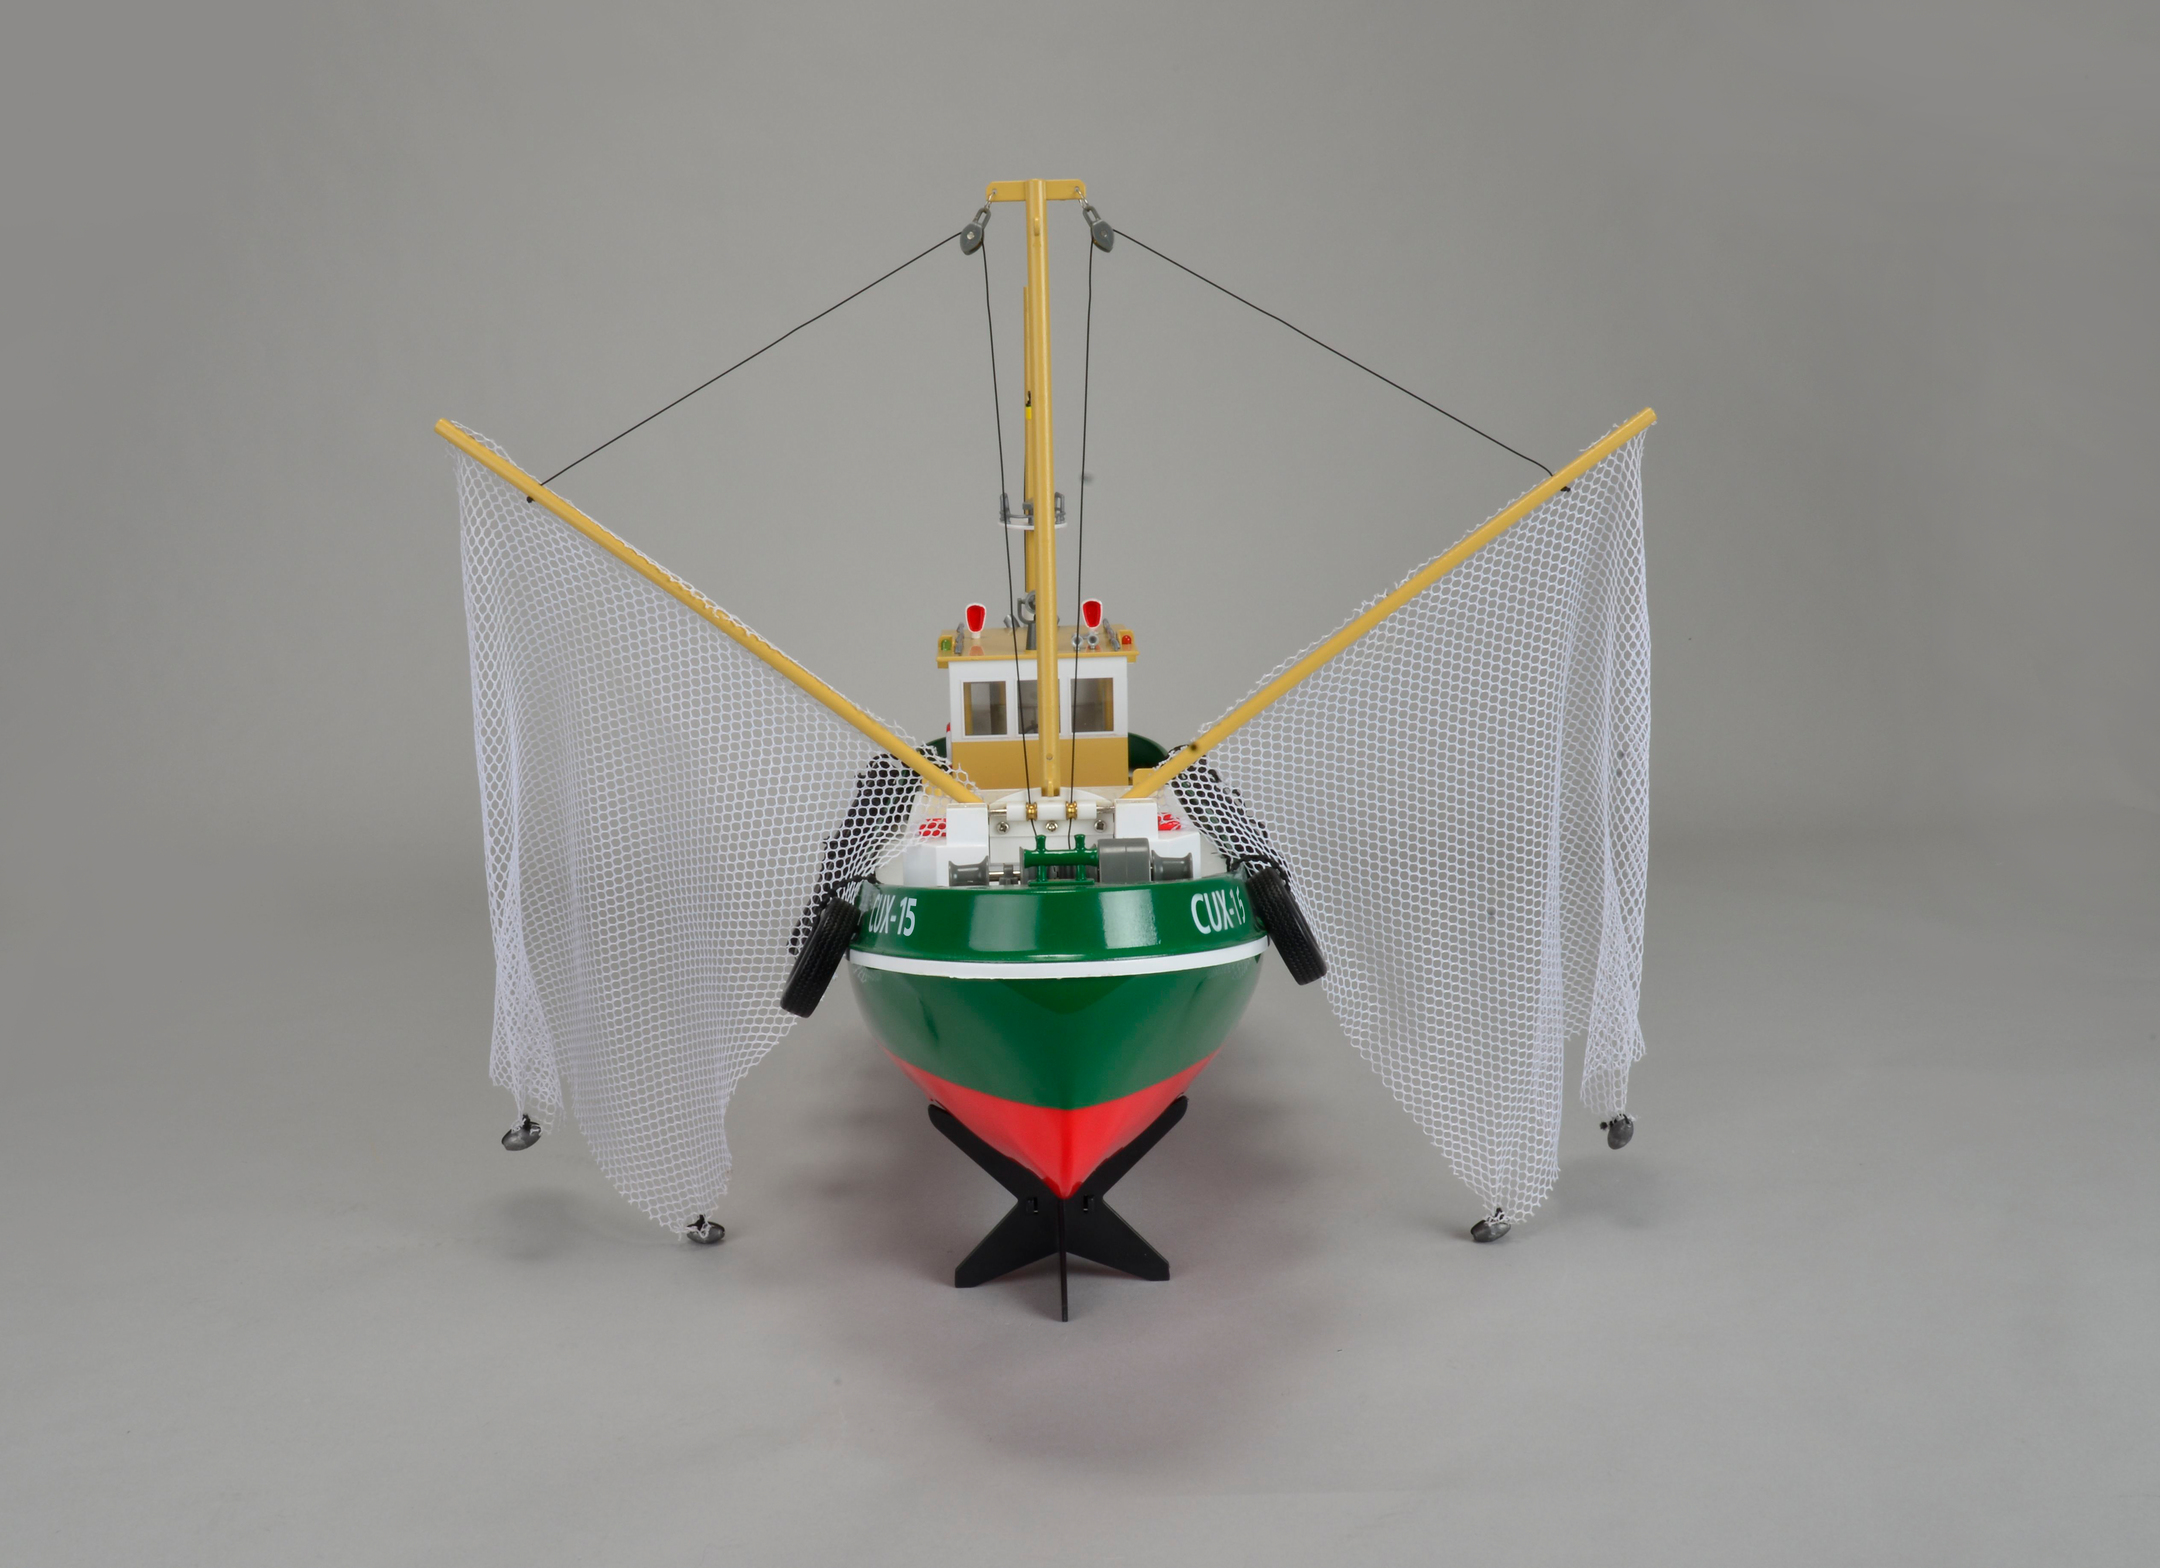 CARSON RC-Fischkutter Cux-15 2.4G Spielzeugboot, 100% Grün RTR